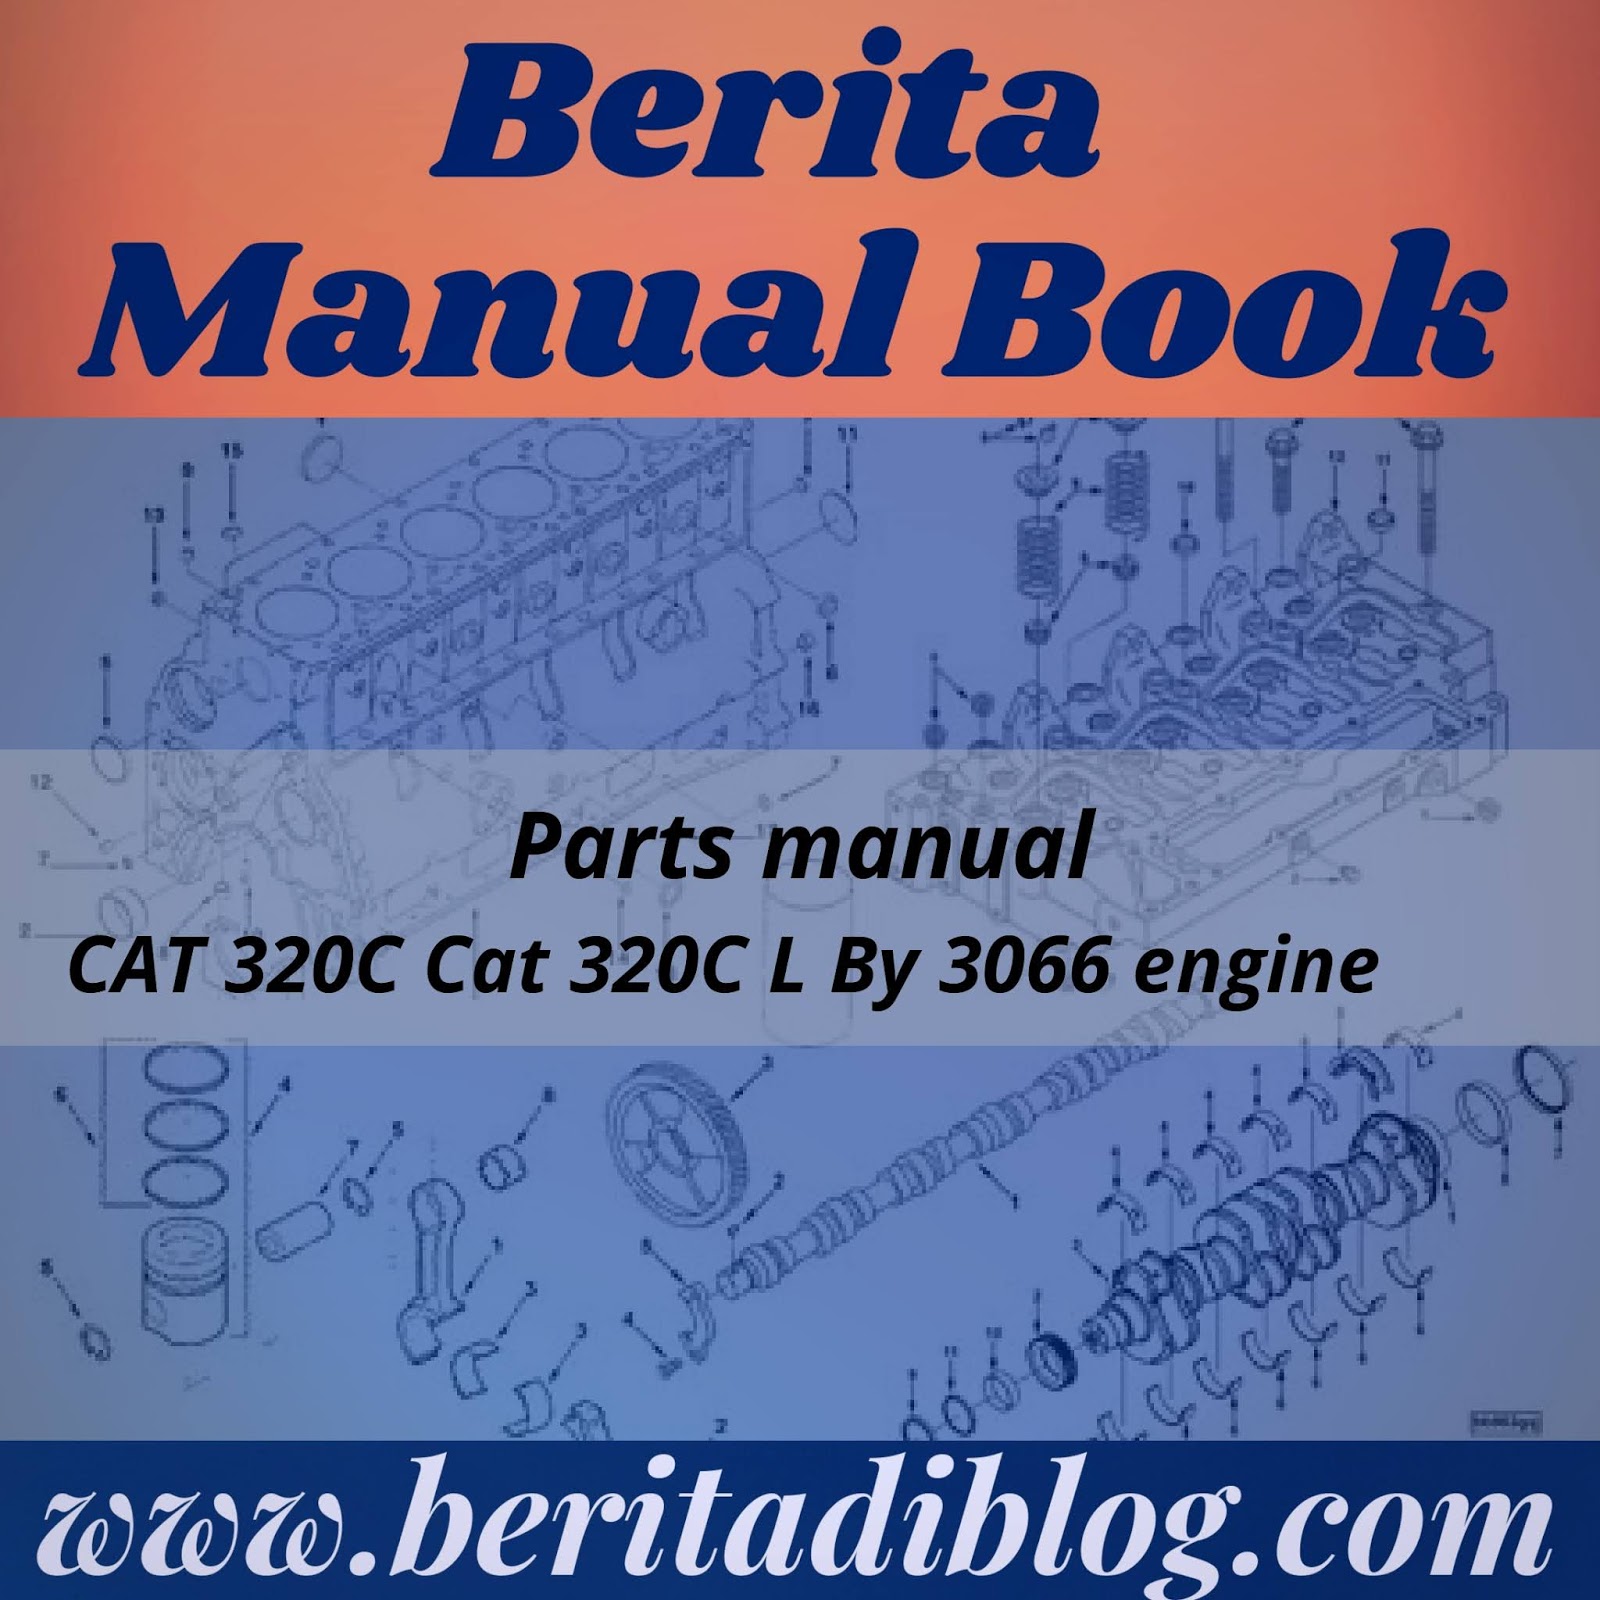 Parts manual CAT 320C Cat 320C L By 3066 engine | Berita Manual Book